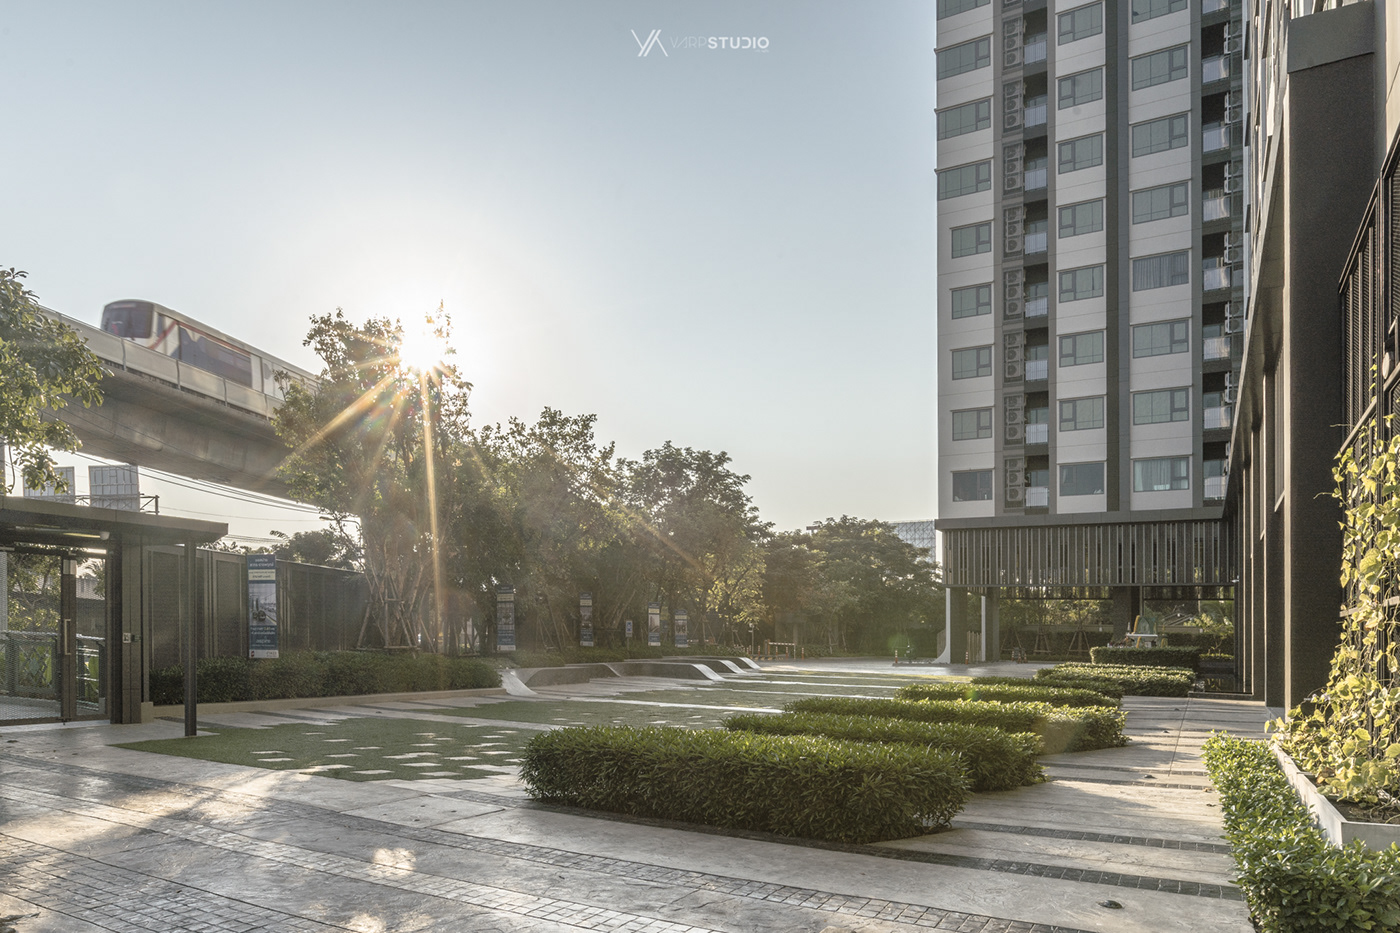 condominium mock up room Swimmingpool facility APThailand aspire Bangkok